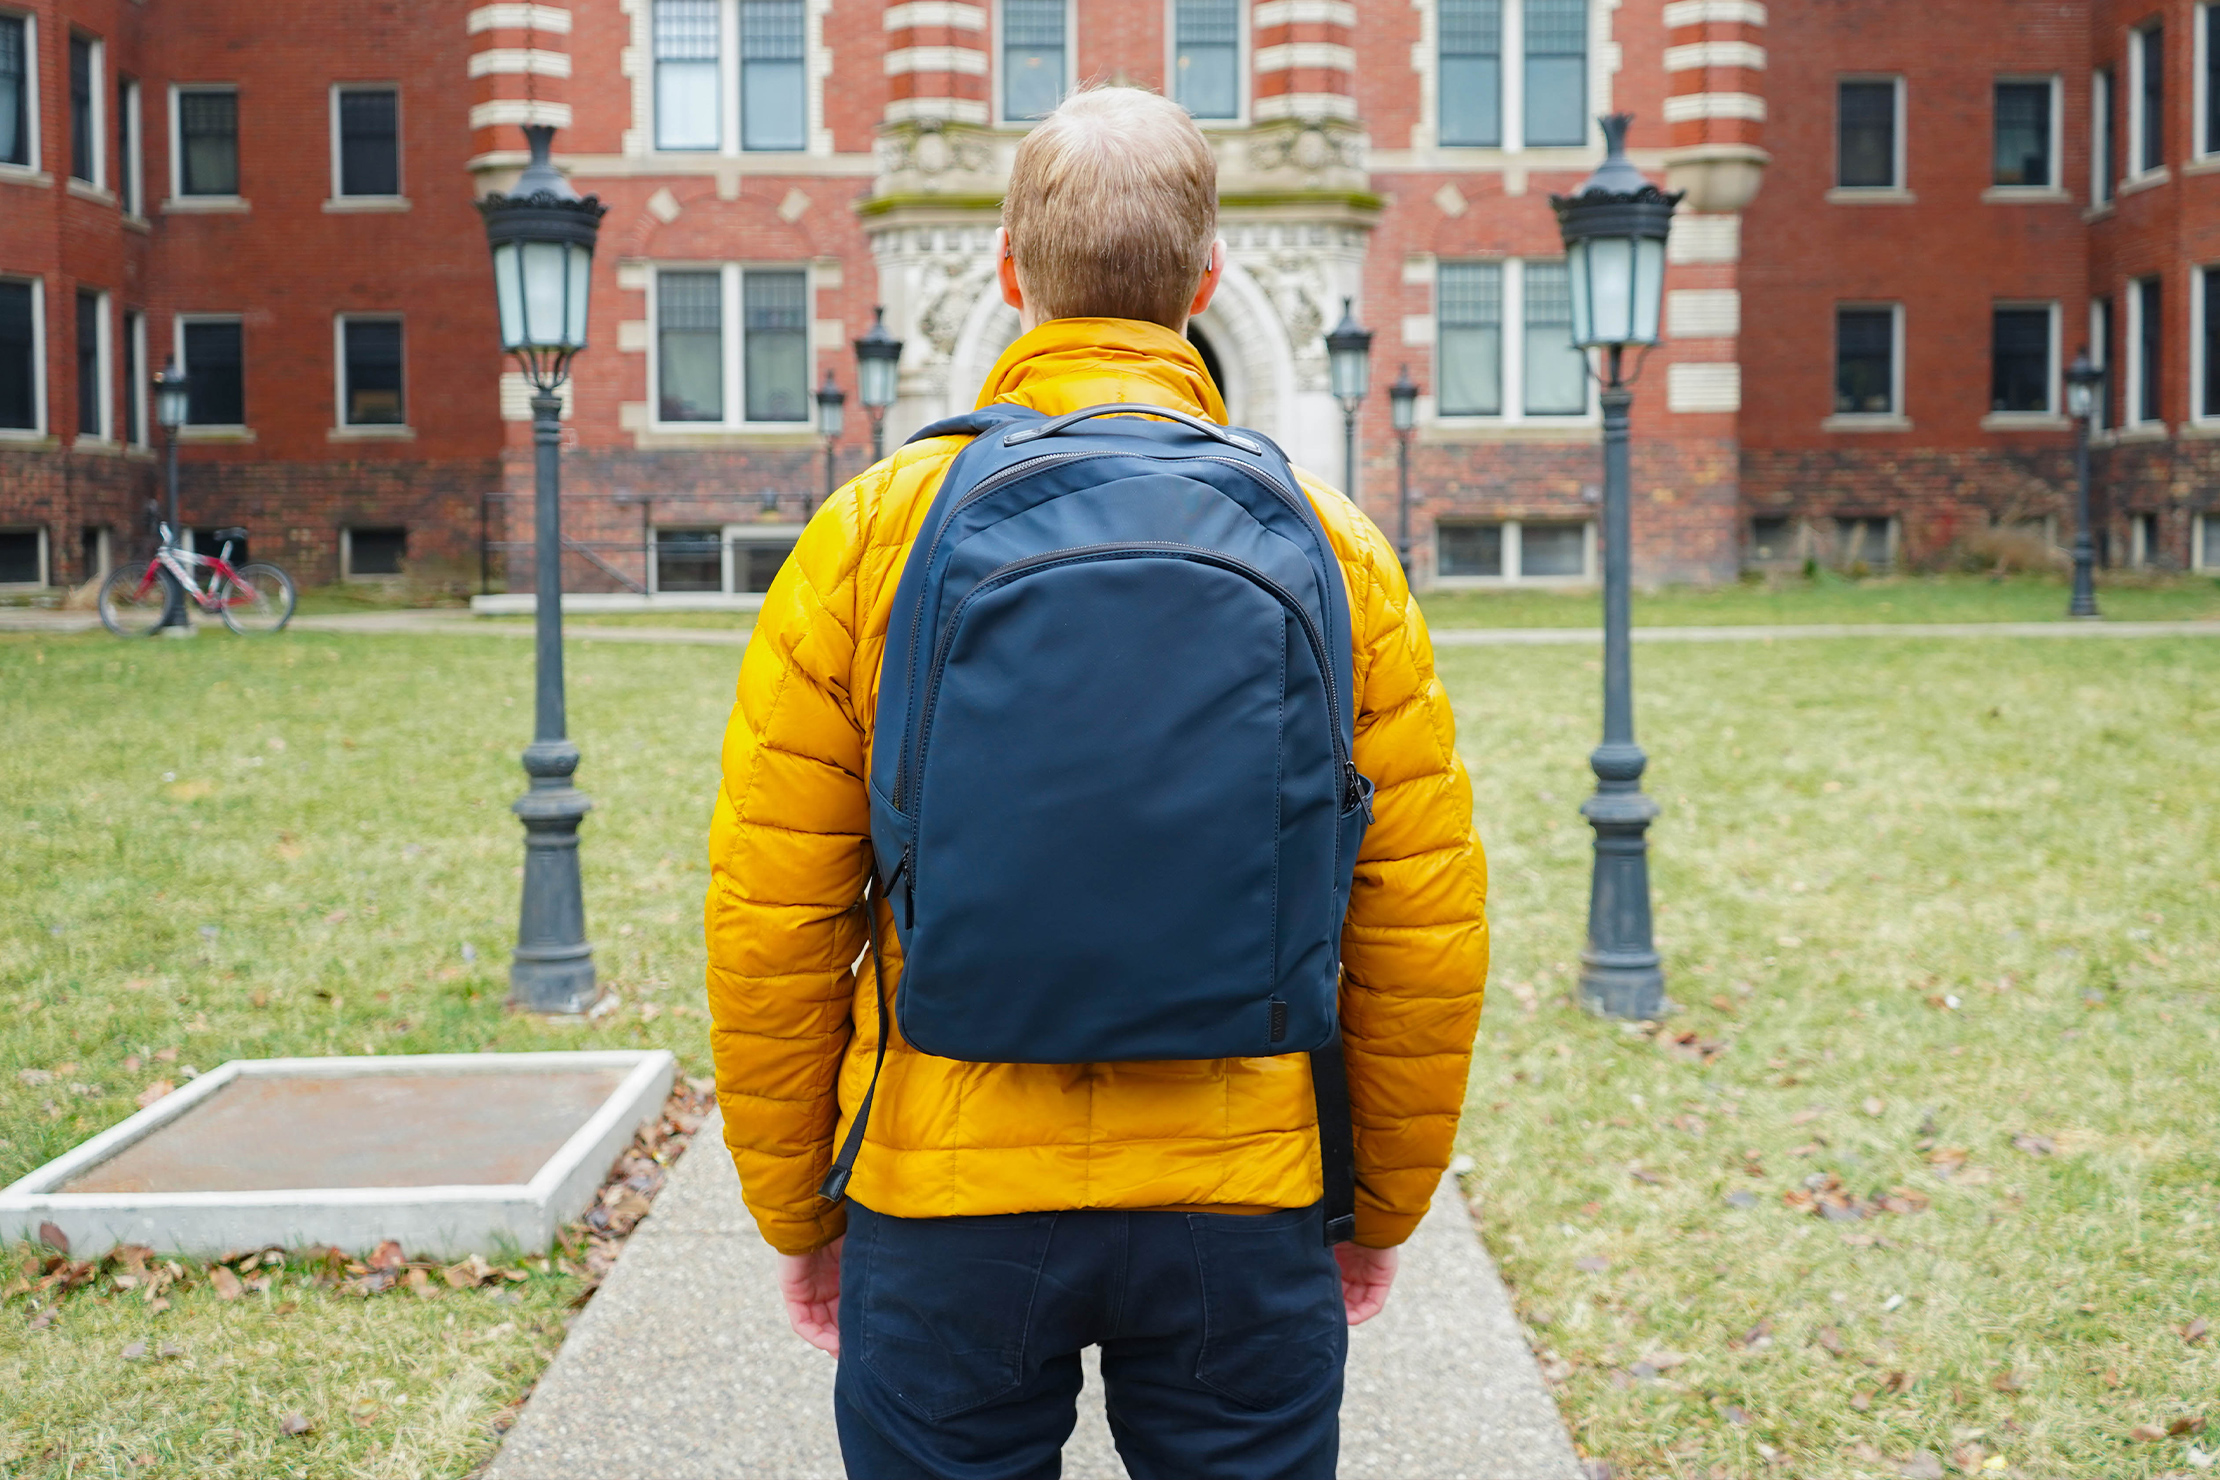 The Front Pocket Backpack  Away: Built for Modern Travel